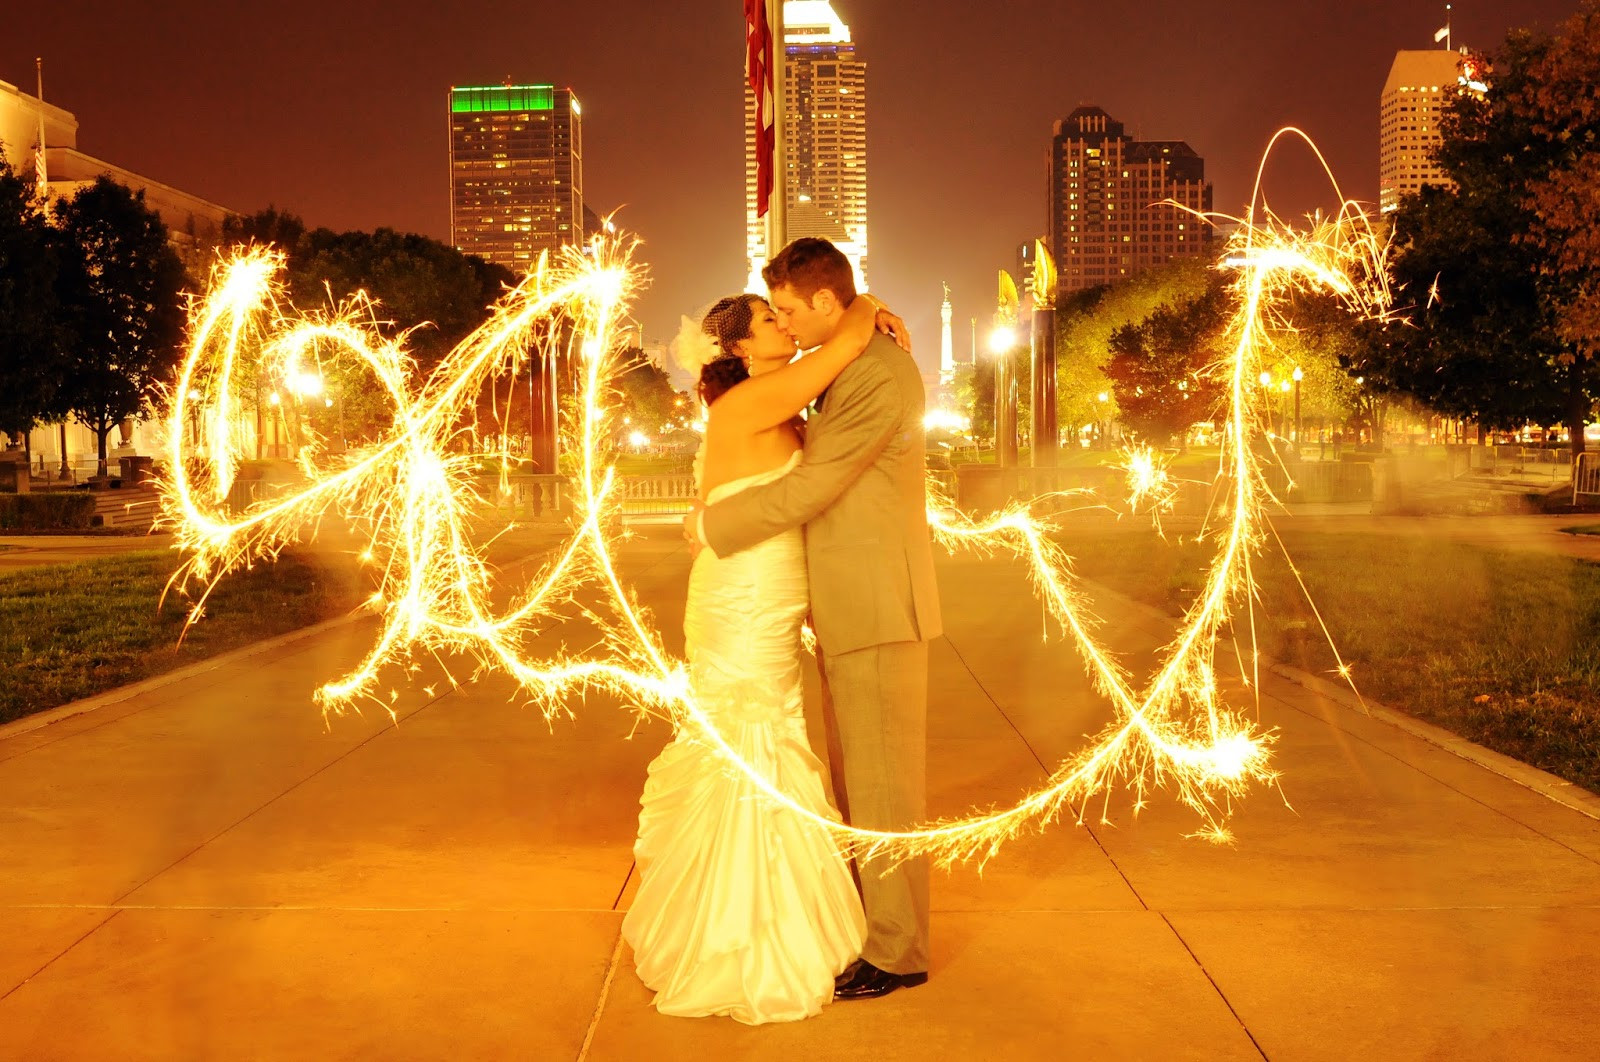 Wedding Sparkler Pictures
 ViP Wedding Sparklers Writing With Wedding Sparklers